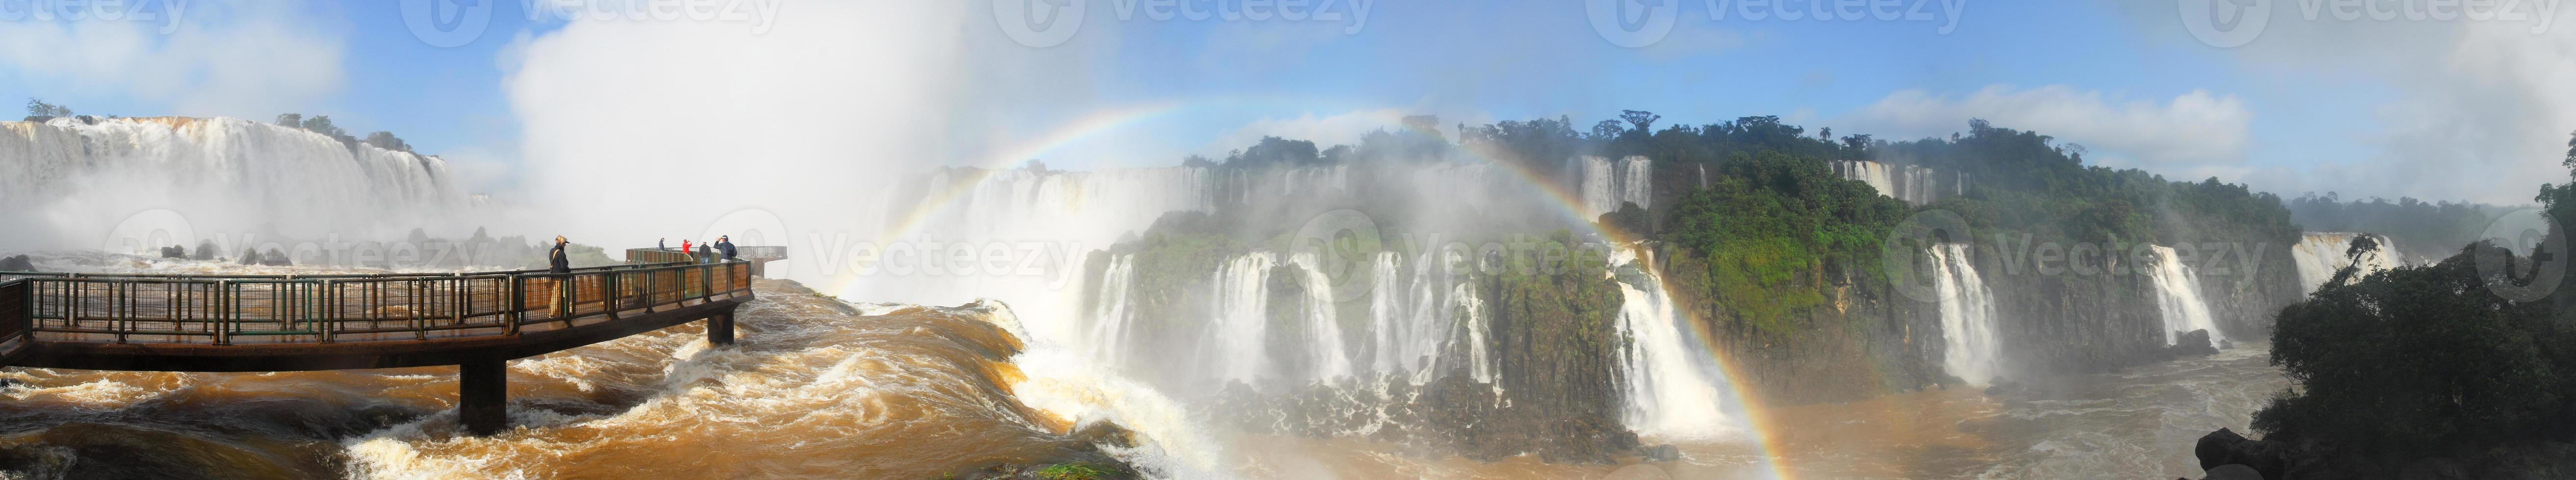 iguassu falls - Brasilien foto